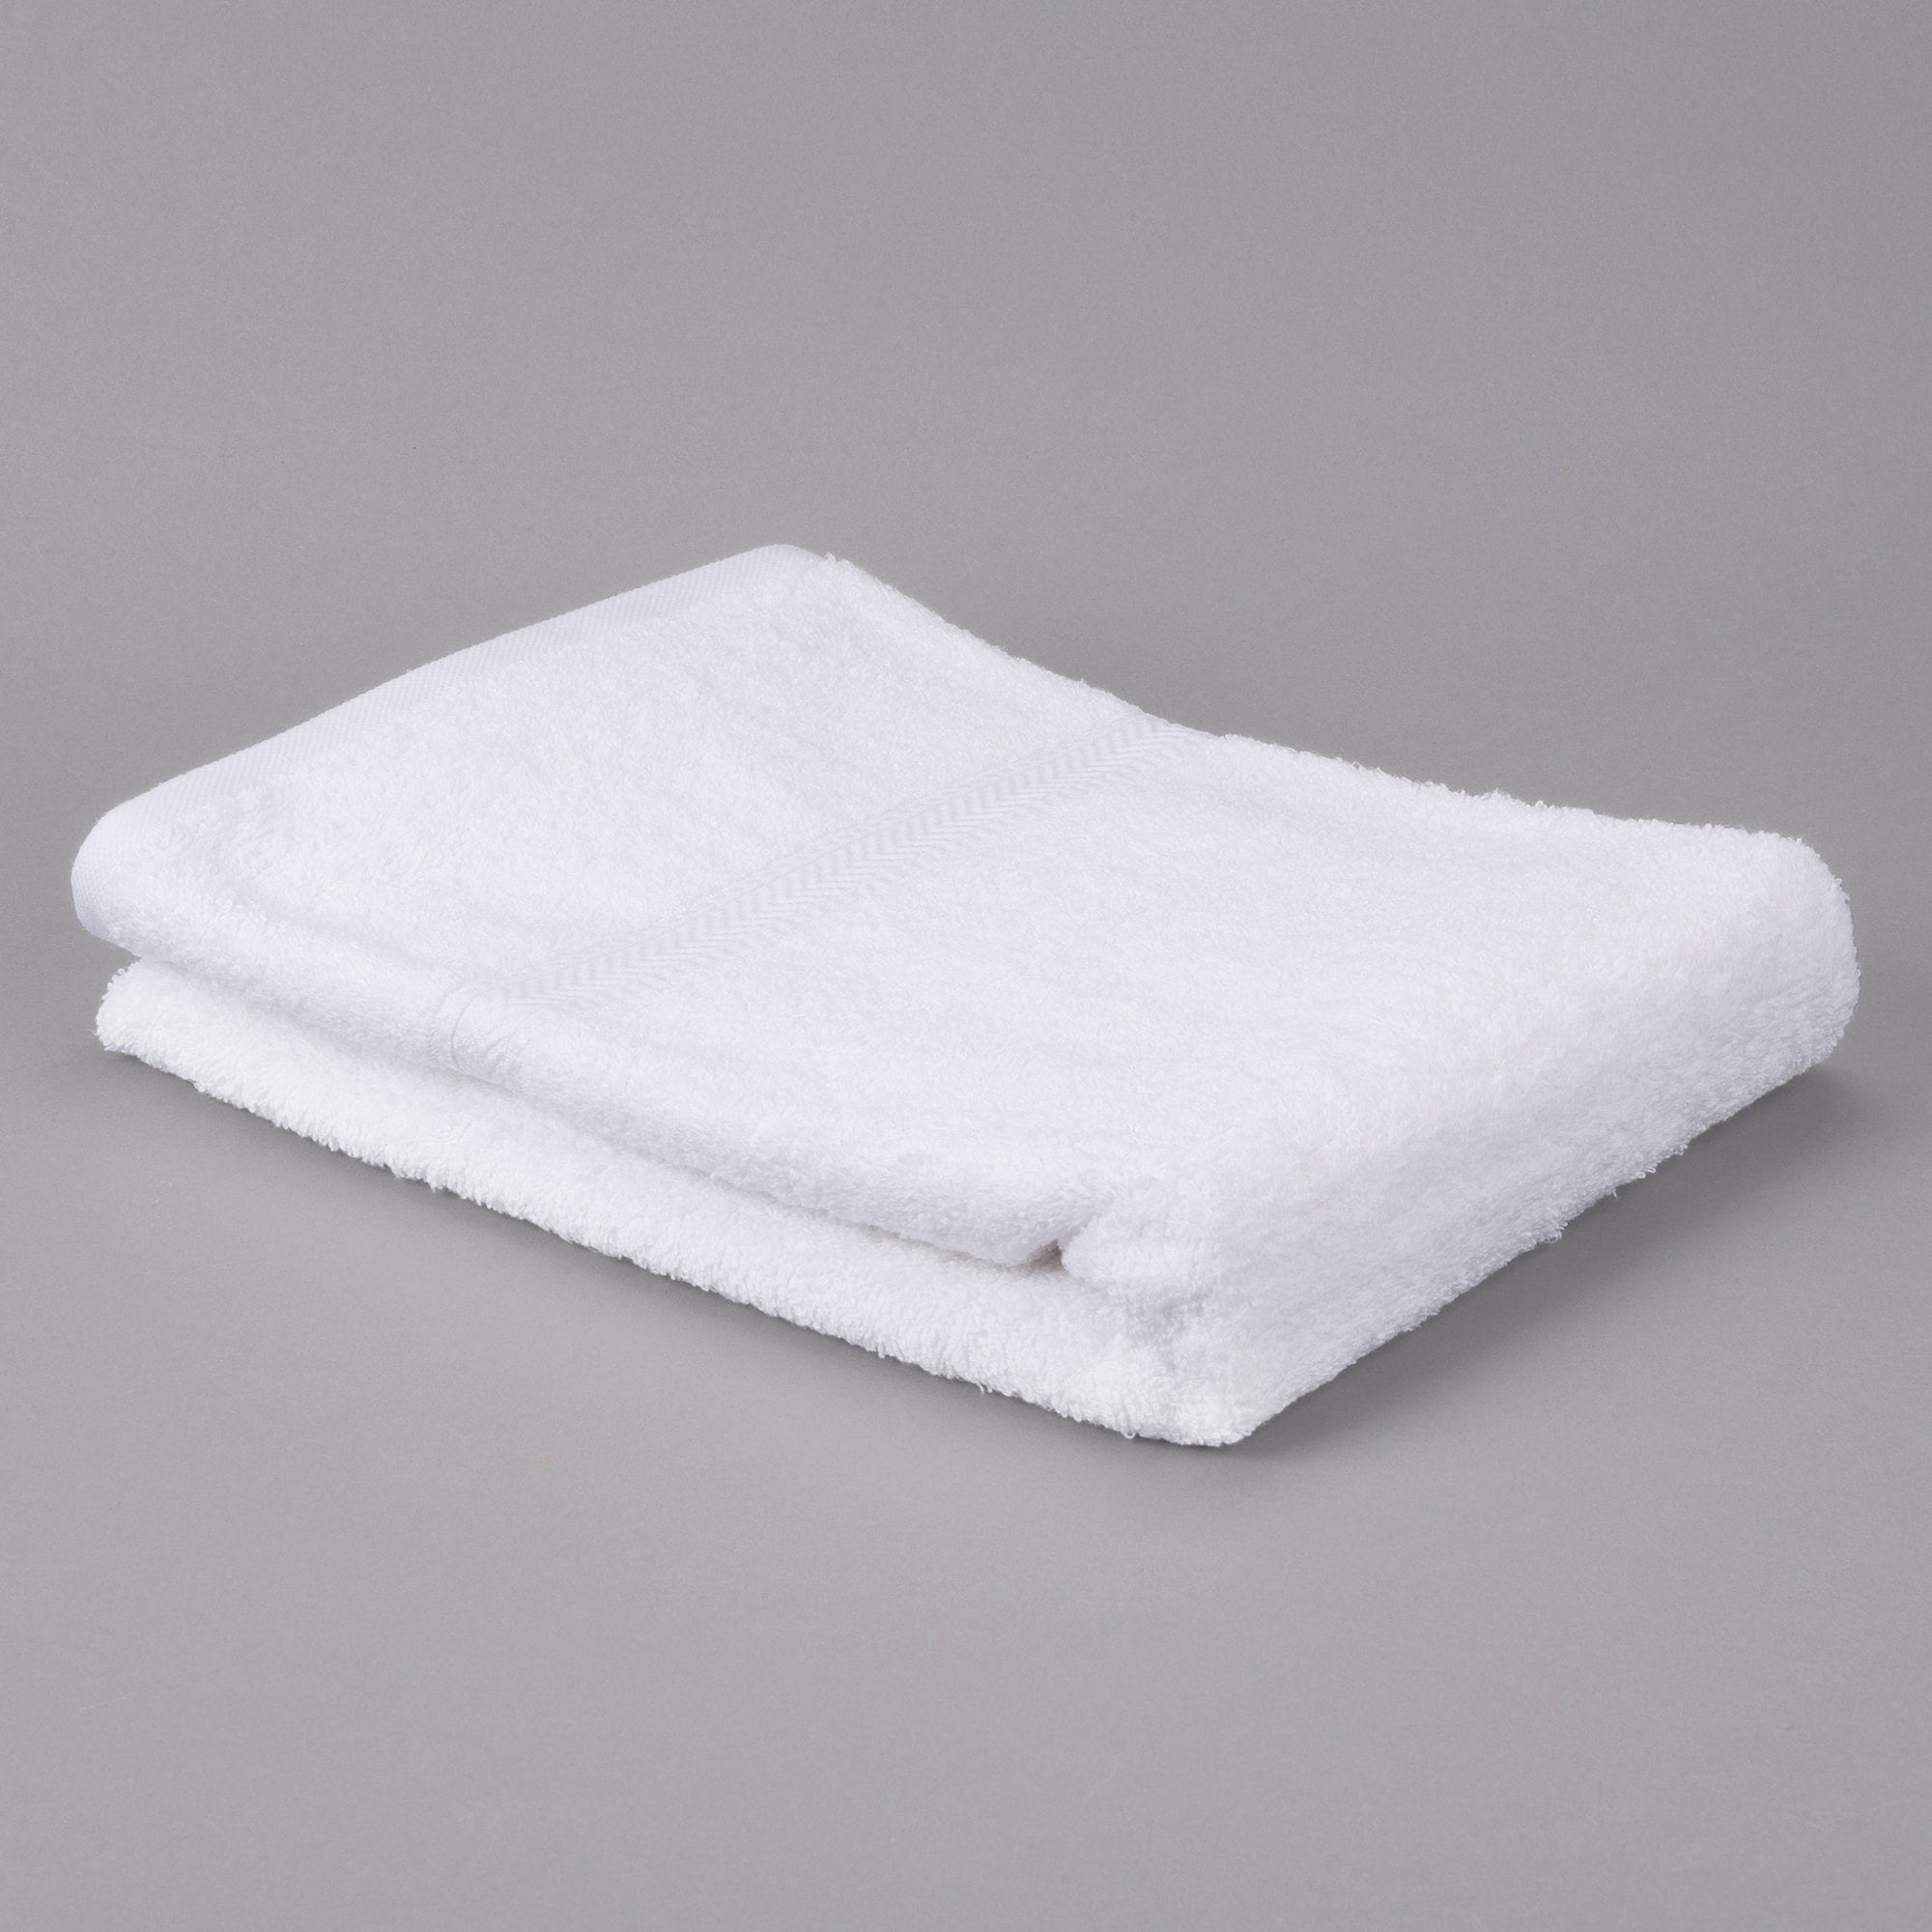 12 pack premium plush absorbent white cotton hotel bath towels large 27x50 14# 